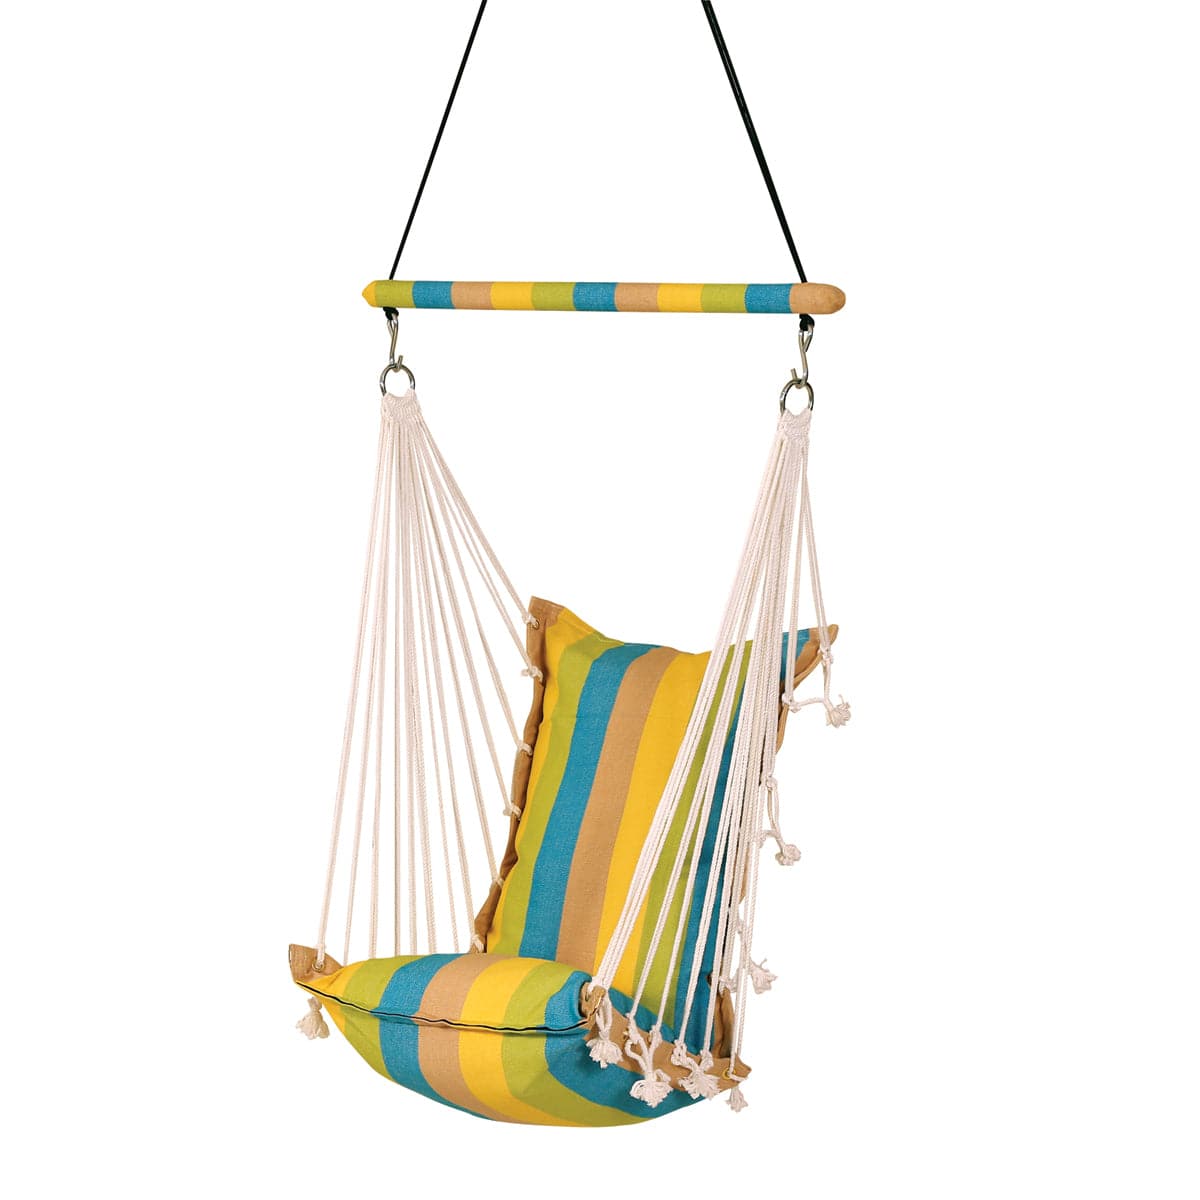 Cotton Jumbo Yellow Swing Chair, Weight Capacity 115kg- 150H X 75W cm